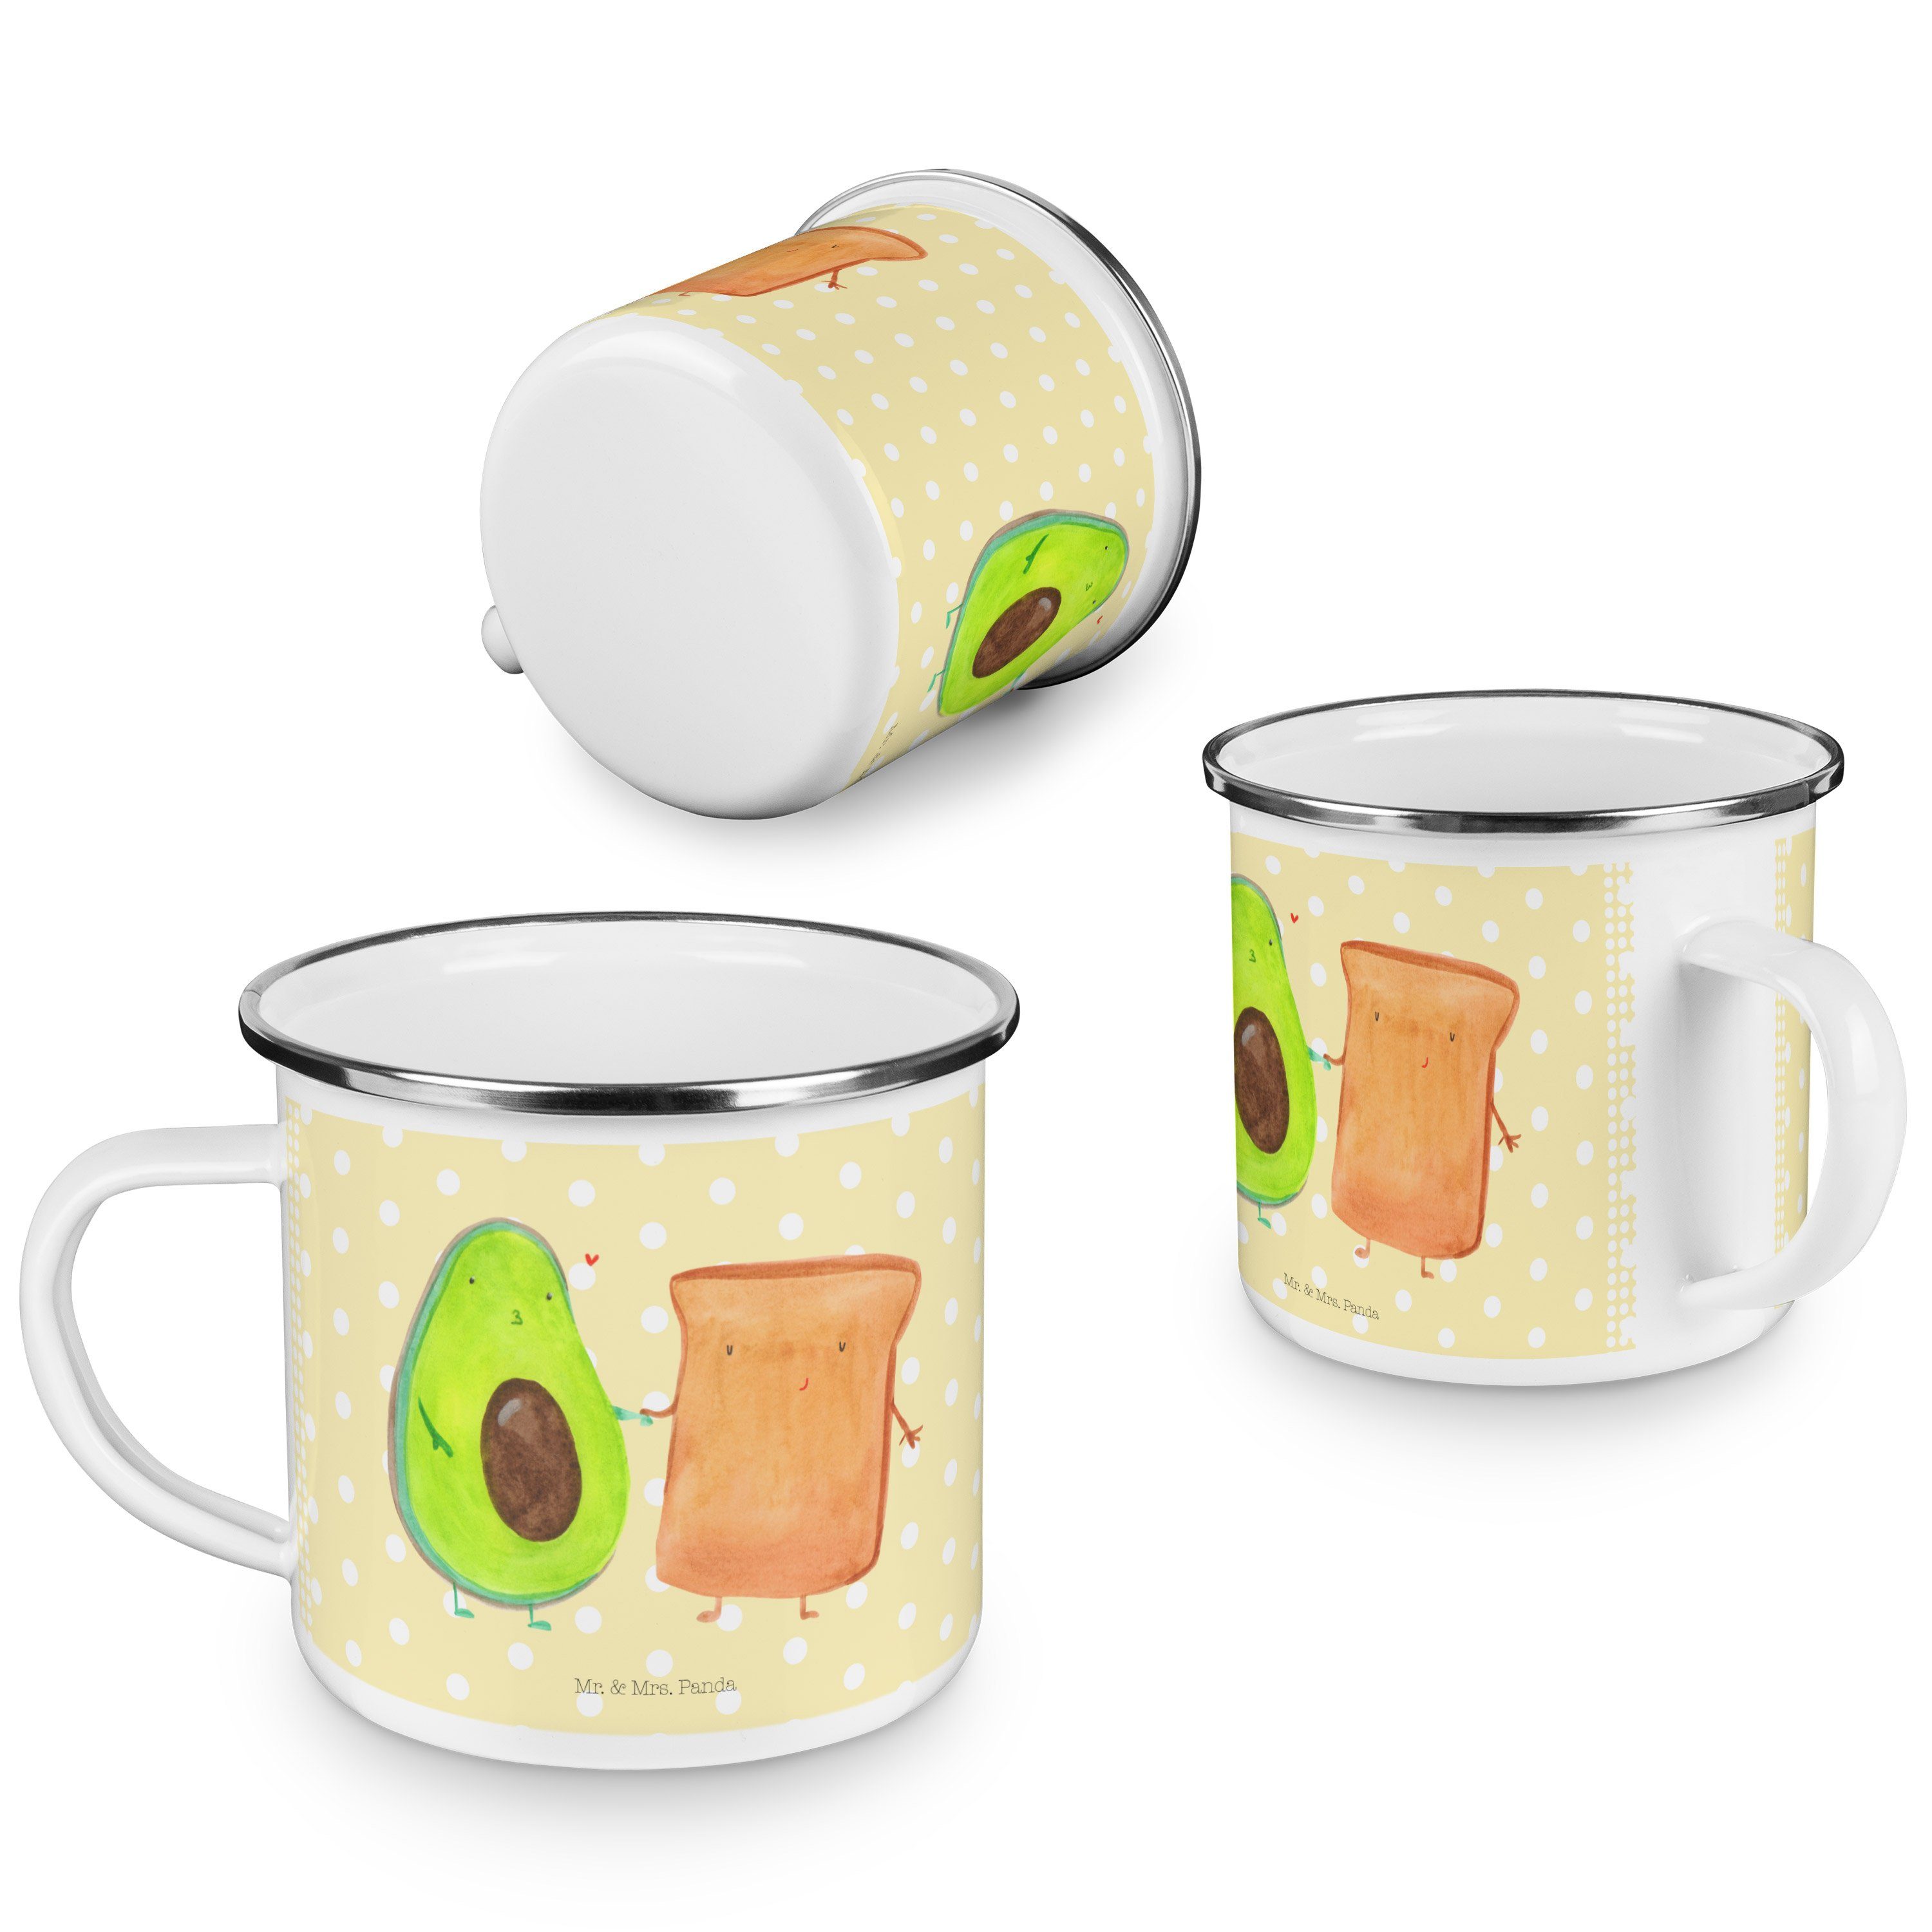 Toastbrot, Toast Gelb - Mr. Geschenk, Mrs. Avocado Emaille Panda + Becher & Emaille - Trinkbe, Pastell